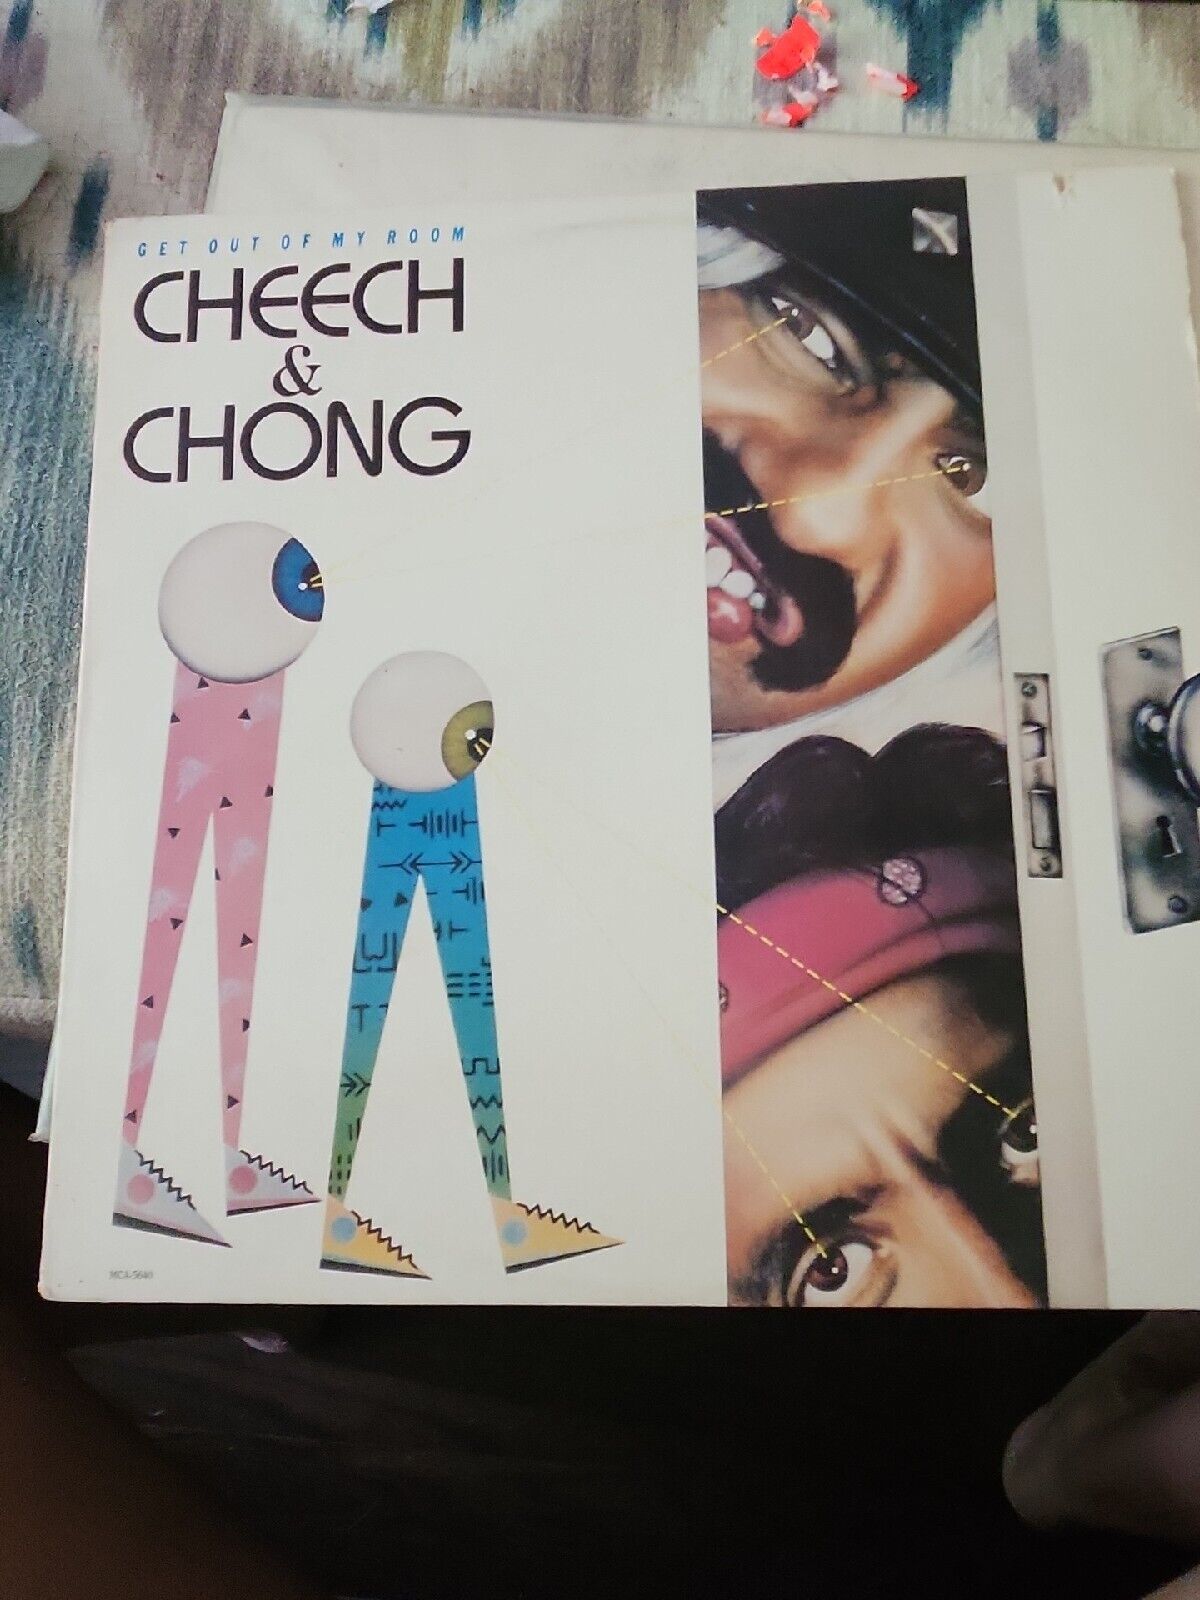 CHEECH AND CHONG “GET OUT OF MY ROOM”, ORIGINAL 1985 VINYL LP